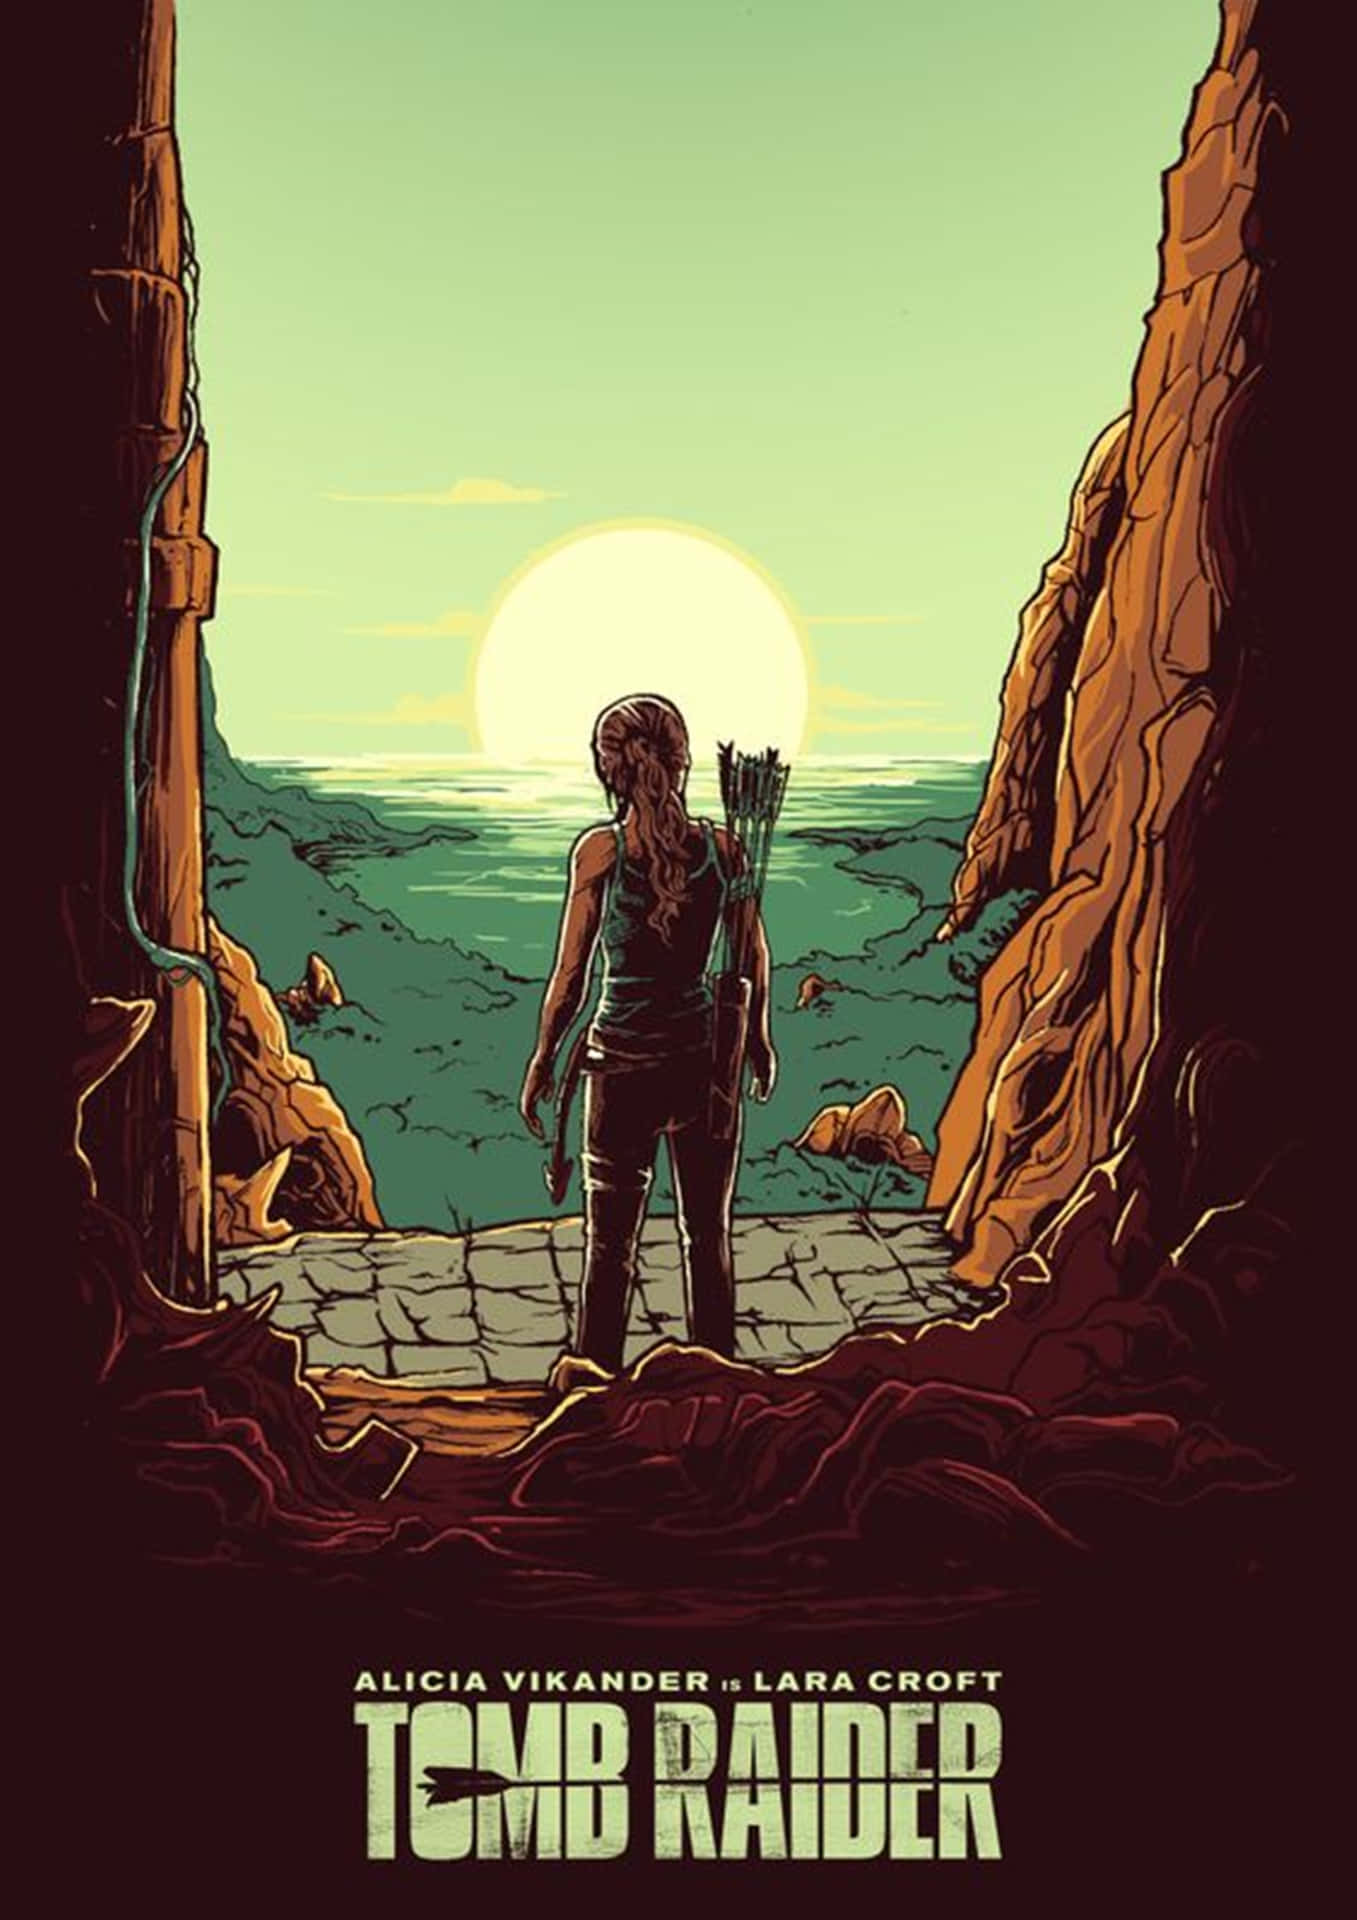 Explore Lara Croft’s Worlds on the Tomb Raider-Themed Smartphone Wallpaper